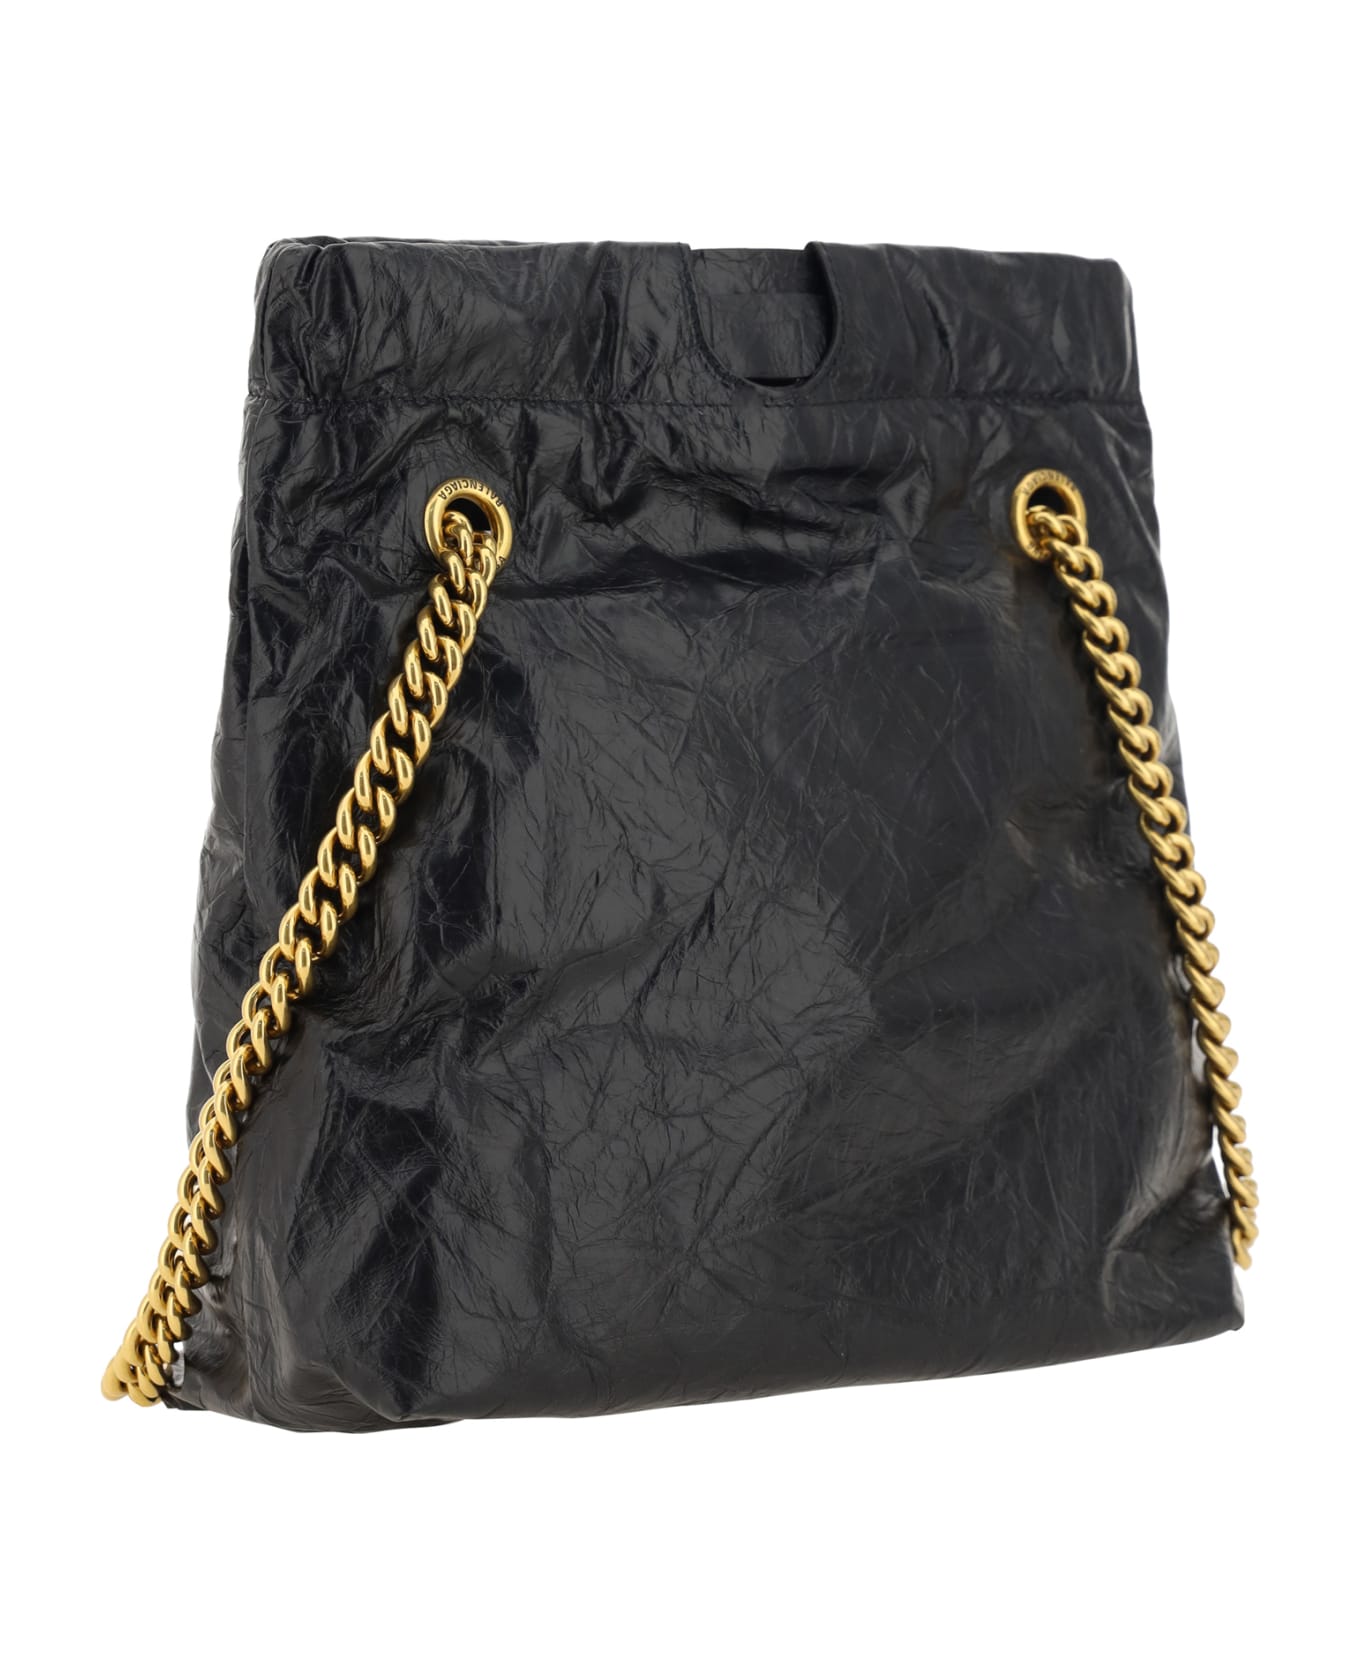 Balenciaga Shoulder Bag - Black ショルダーバッグ